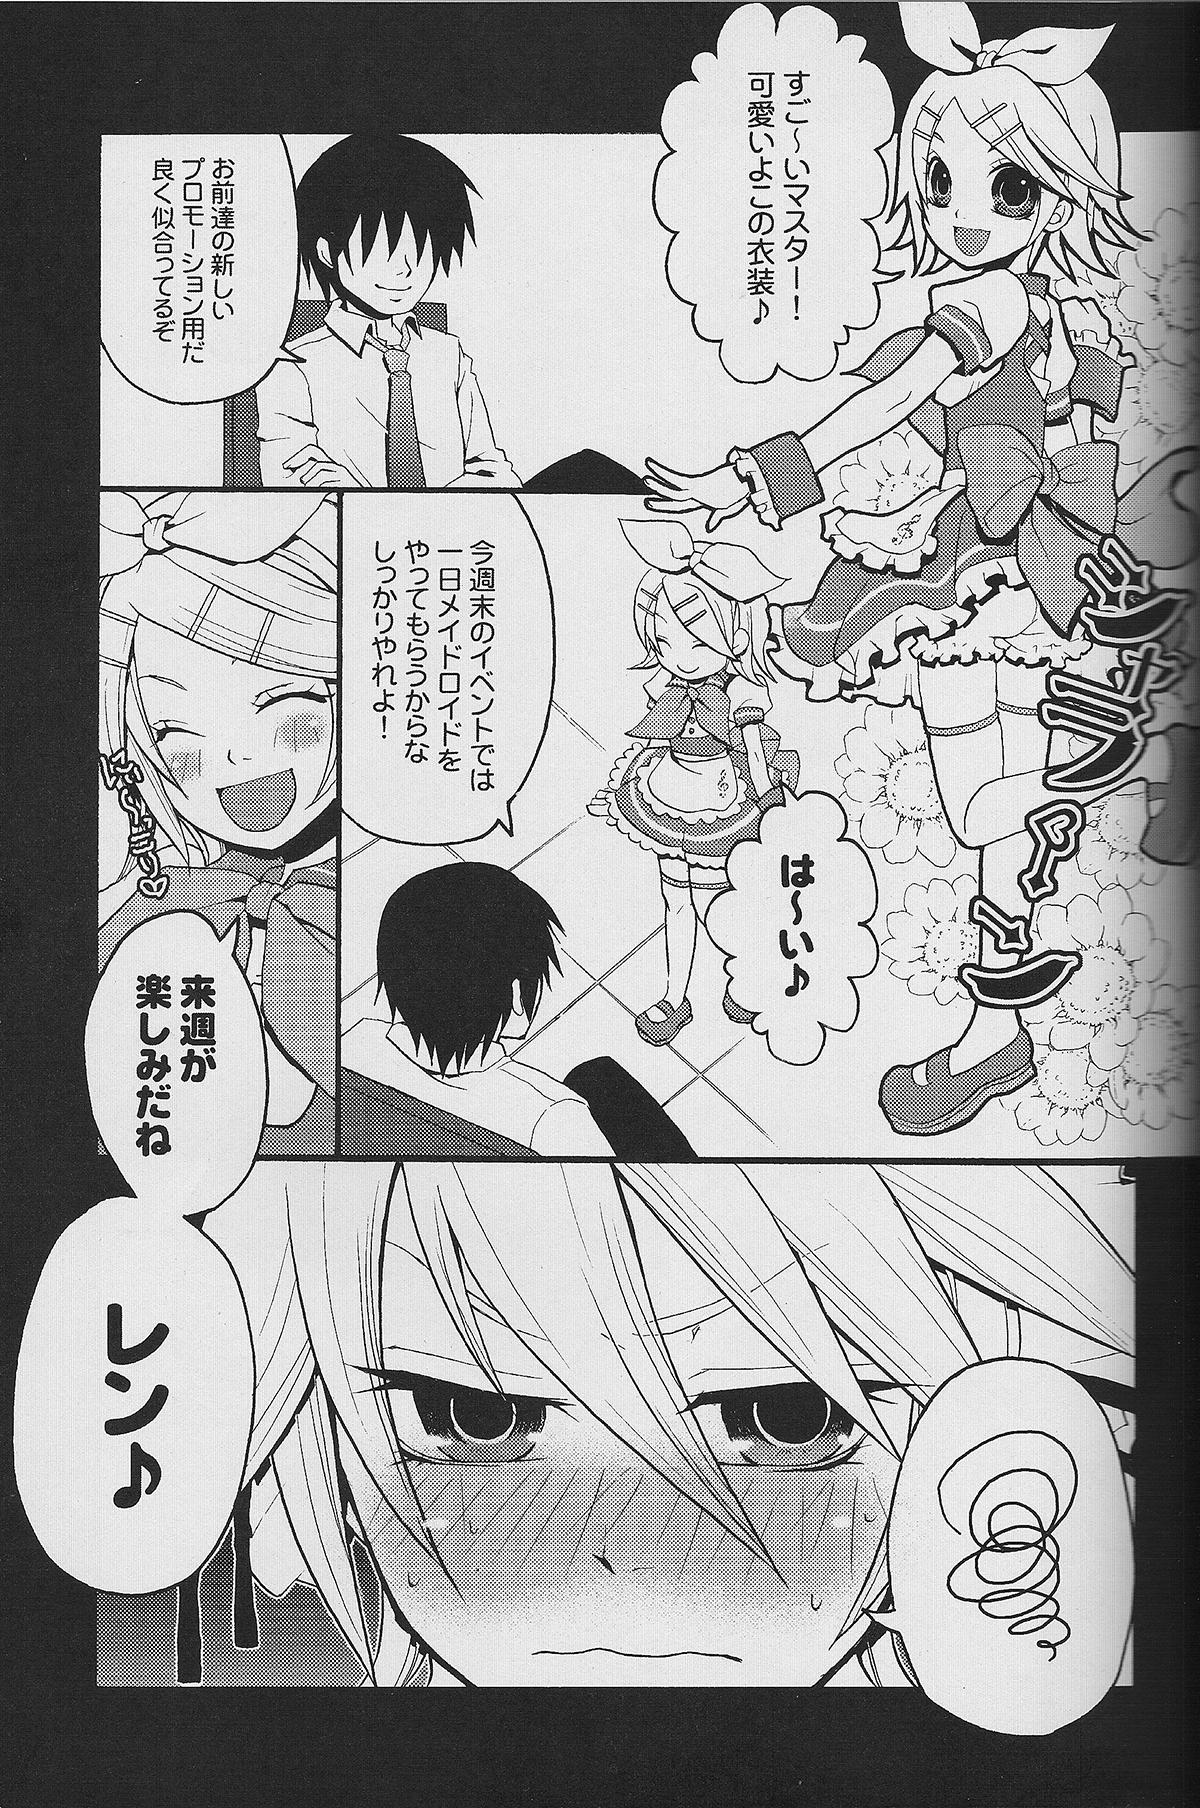 Massage TsundeLen Cafe Betsubara! - Vocaloid Phat - Page 6